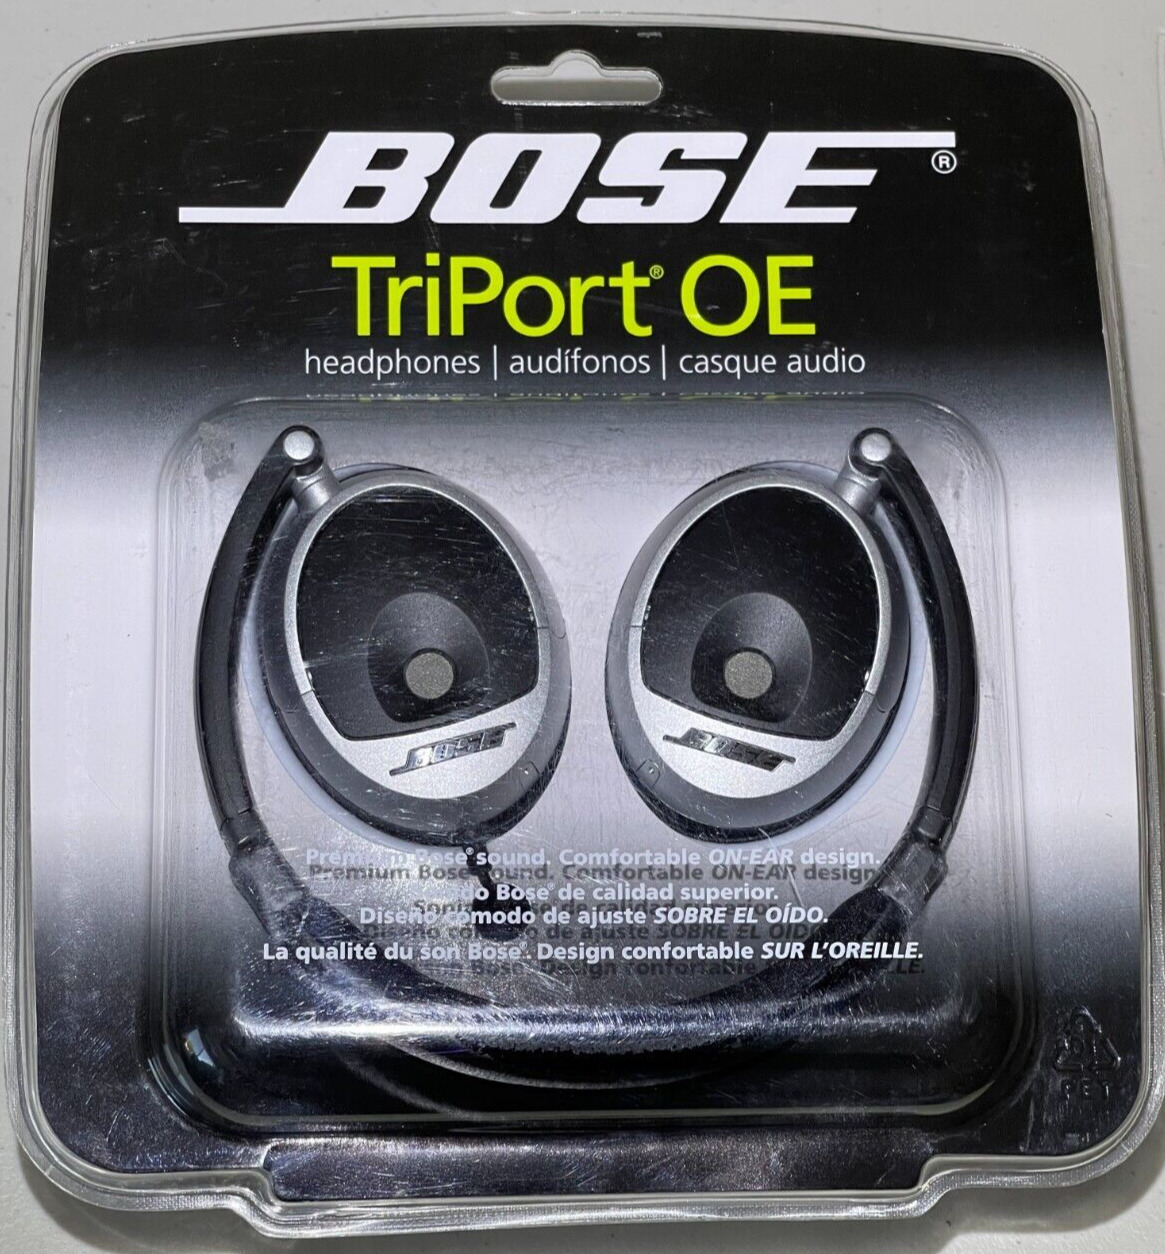 BOSE Triport OE On-Ear Wired Headphones Headset Earphones w Collapsible Headband